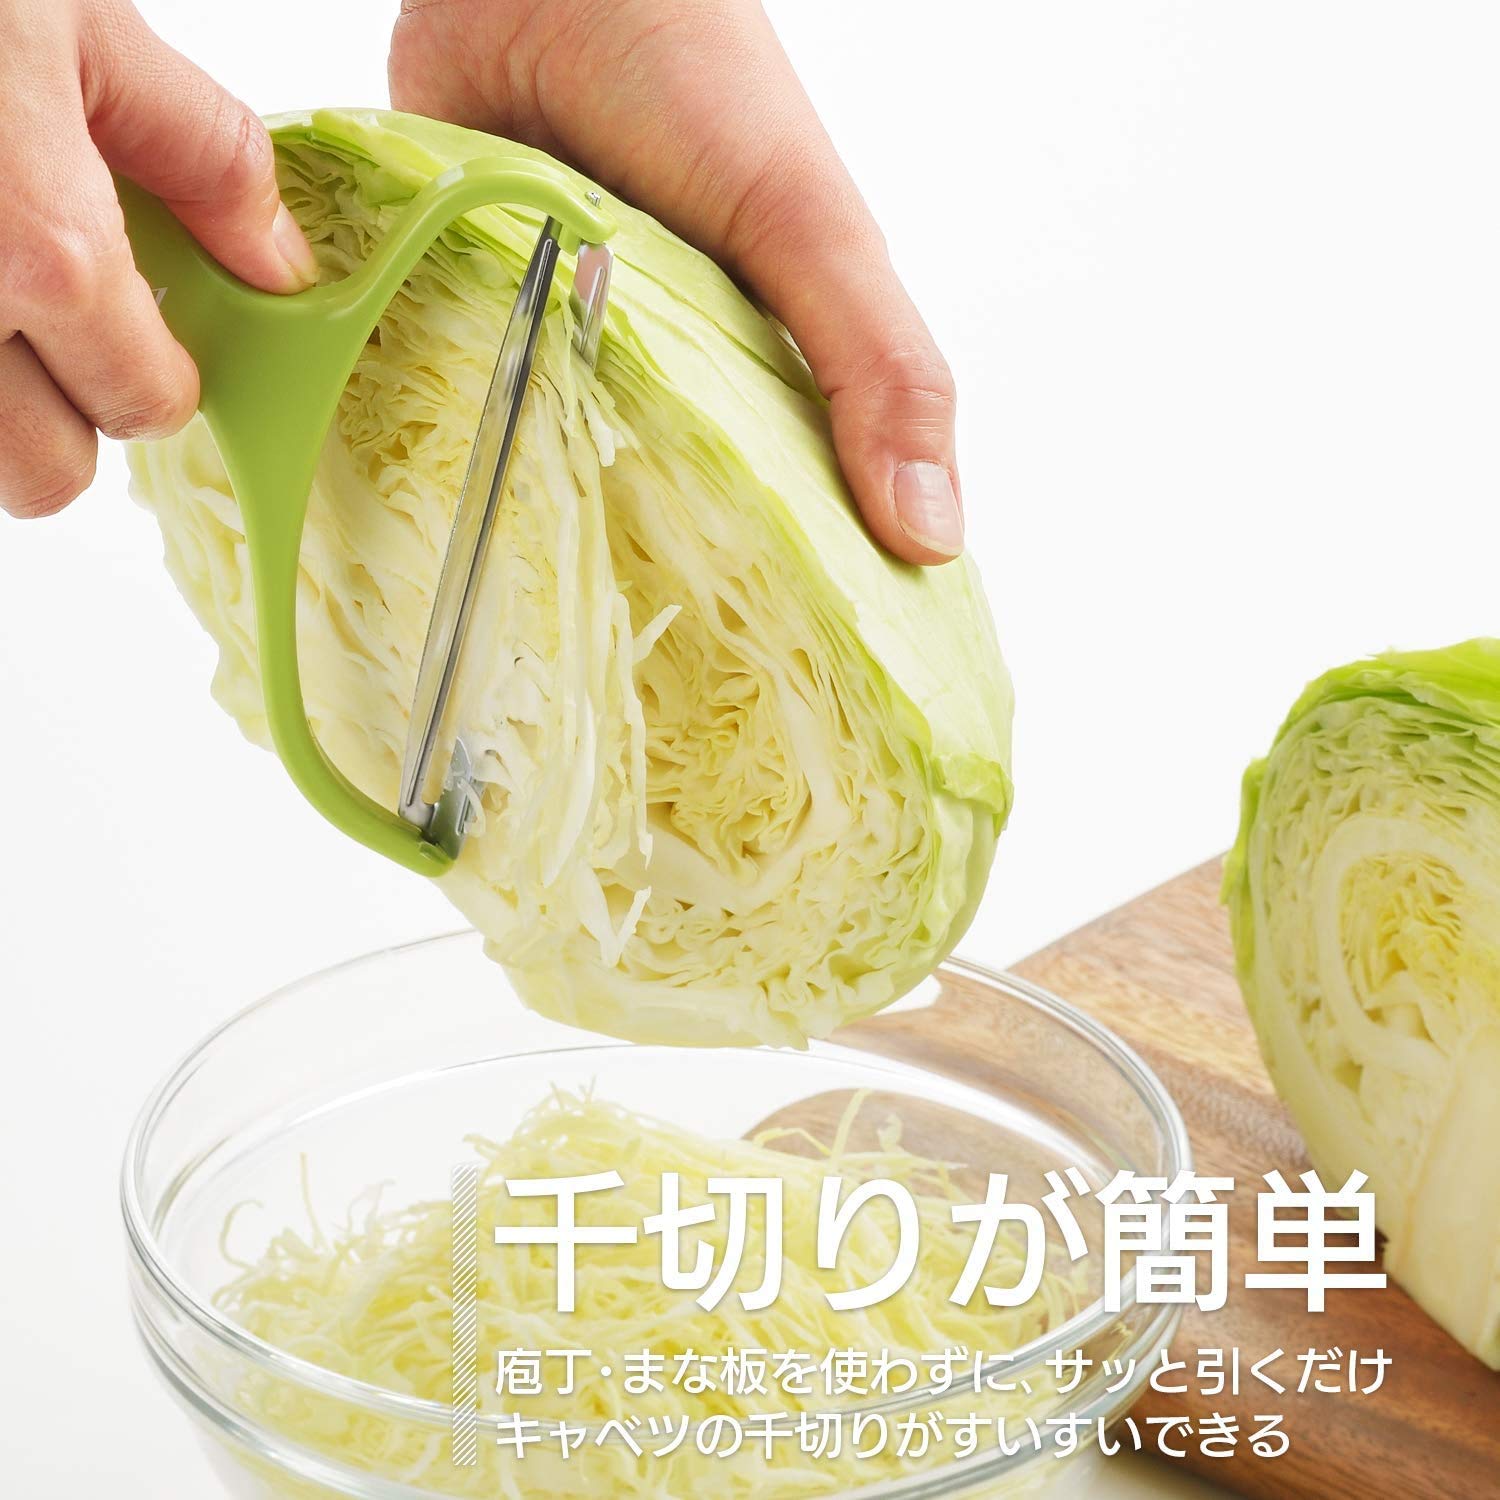 Shimomura Kogyo VCW-04B Japan Verdun Cabbage Peeler Black Dishwasher Safe Niigata Tsubame-Sanjo